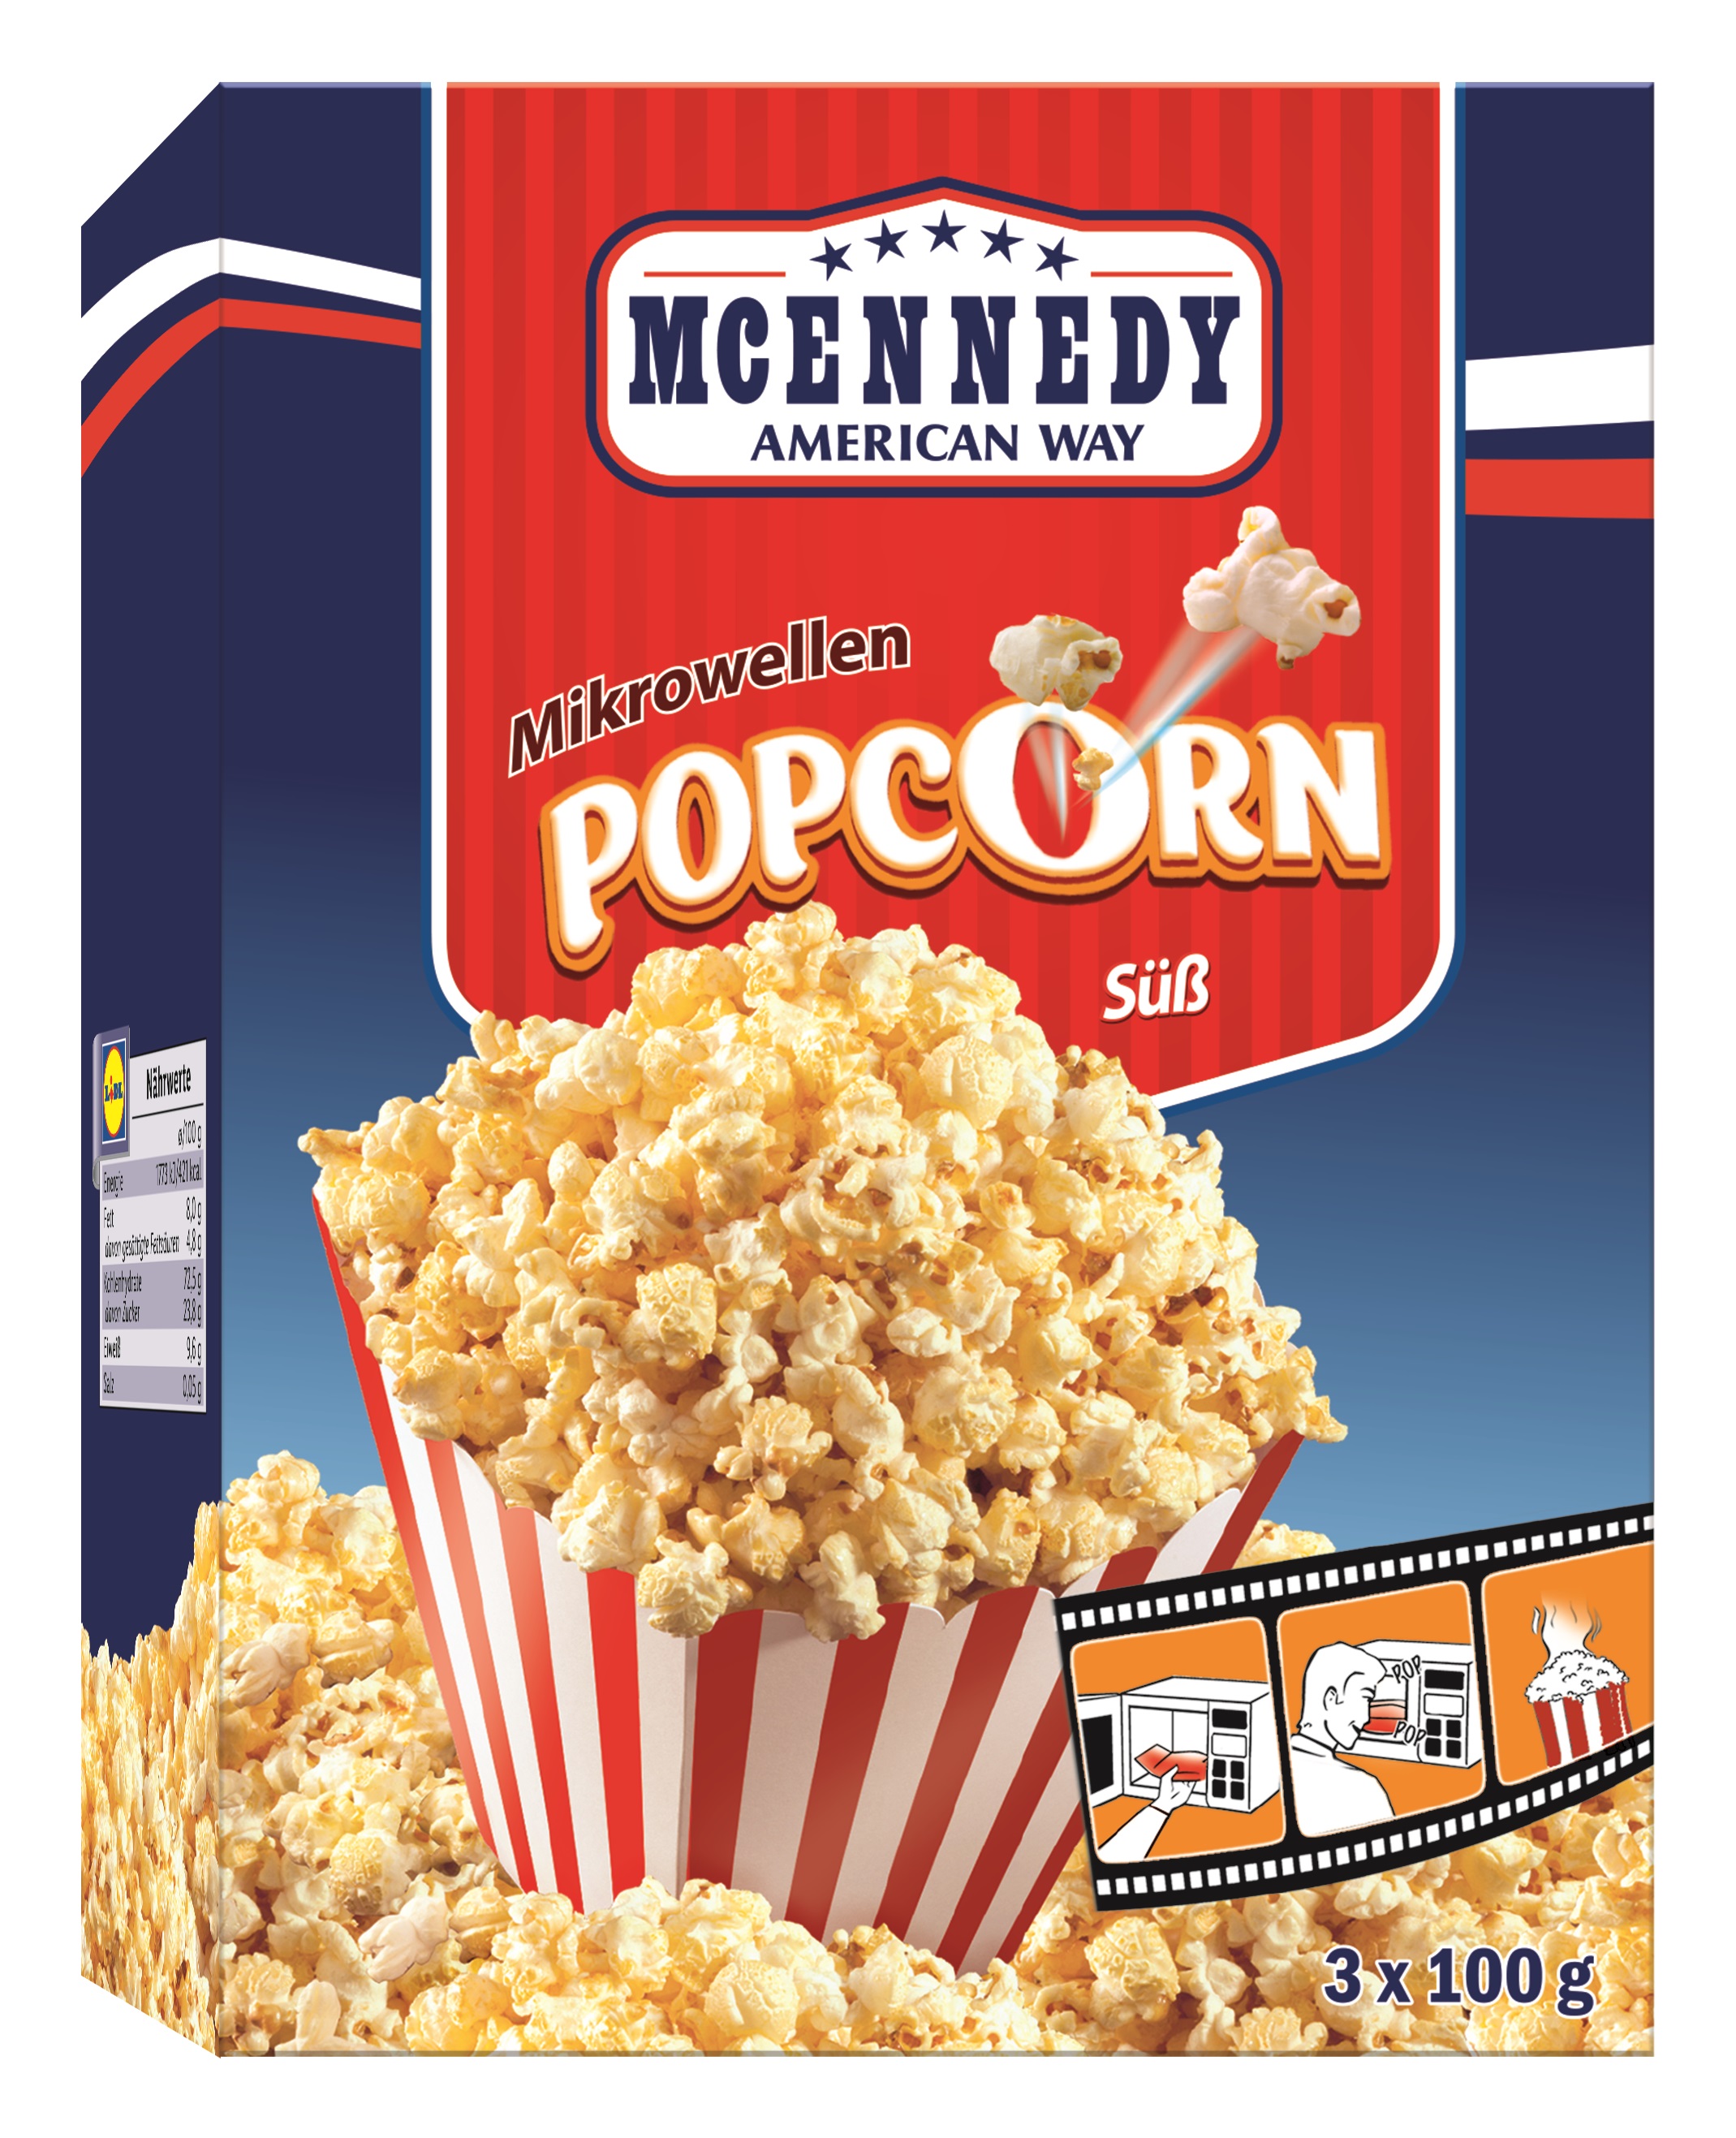 Rückruf: Lidl ruft wegen zurück Pestizid Popcorn